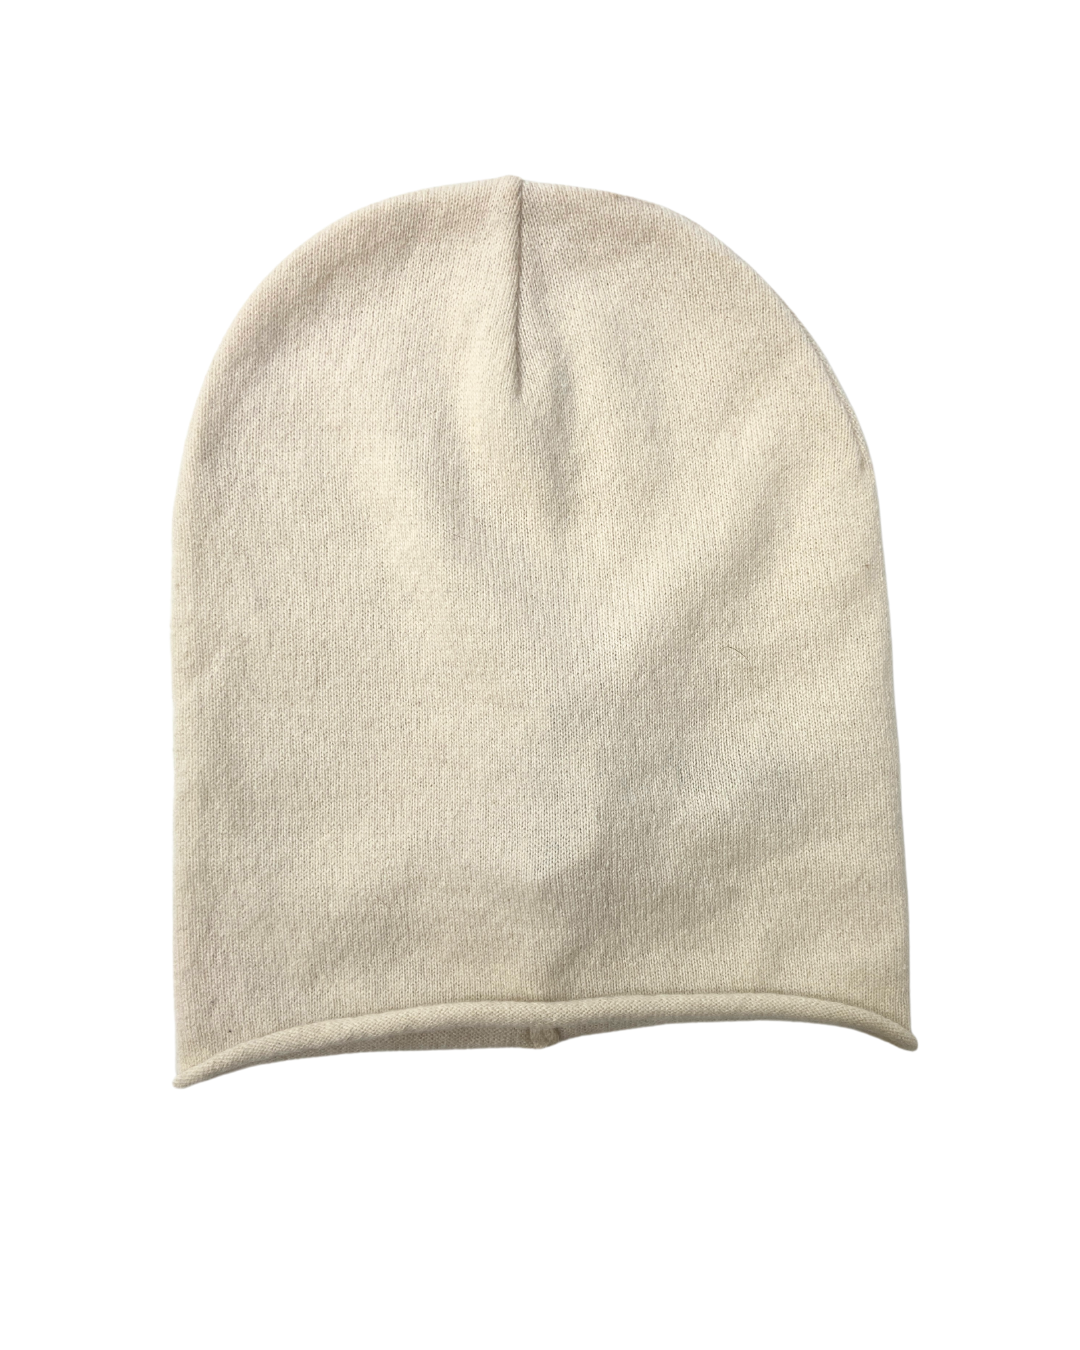 Grana Cream Knit Hat